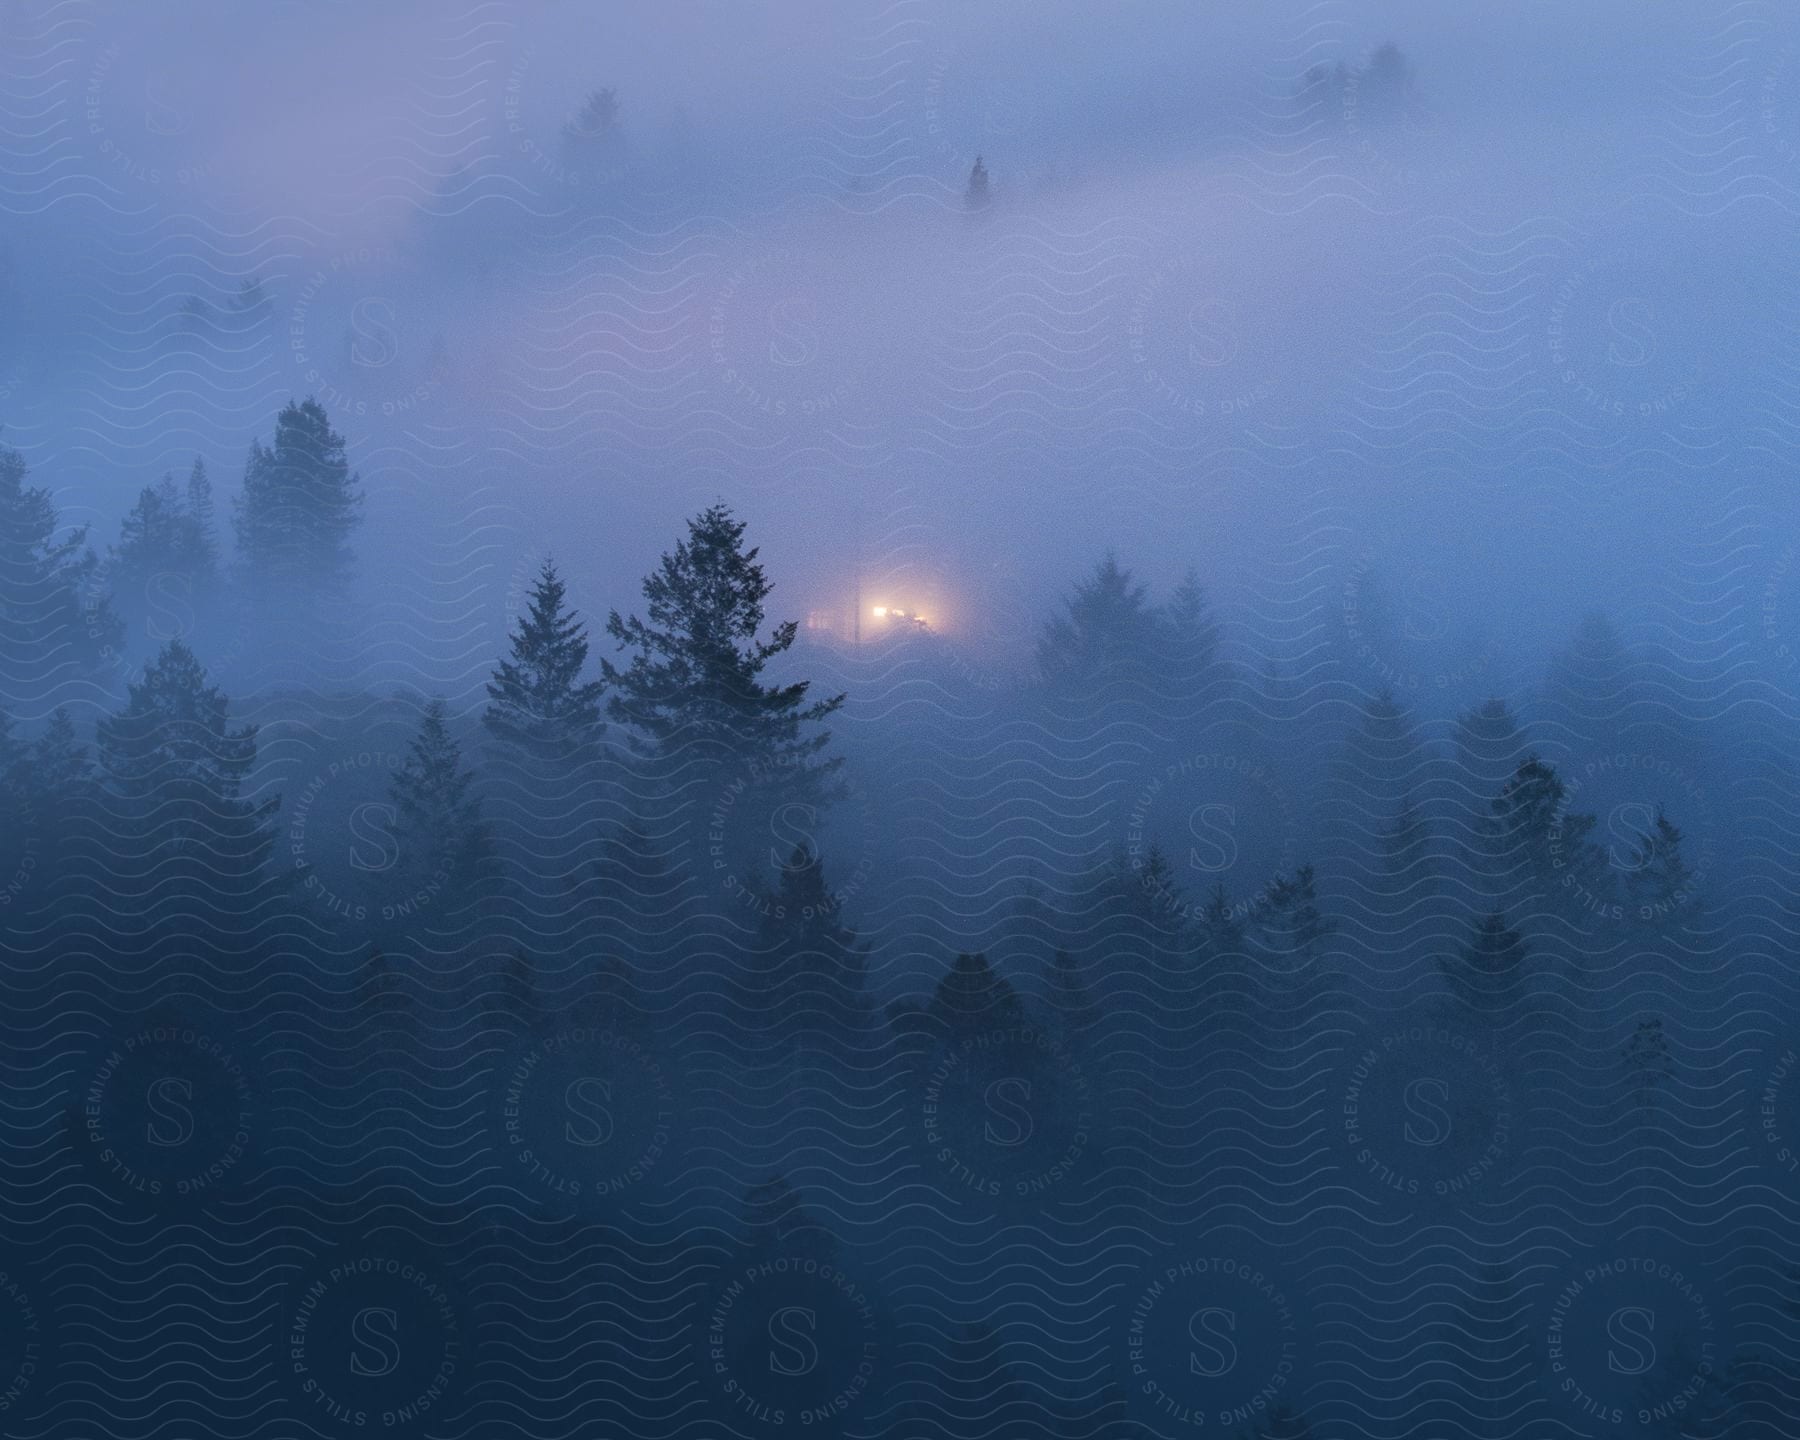 Heavy fog settles over the woods in this eerie nature scene at dusk